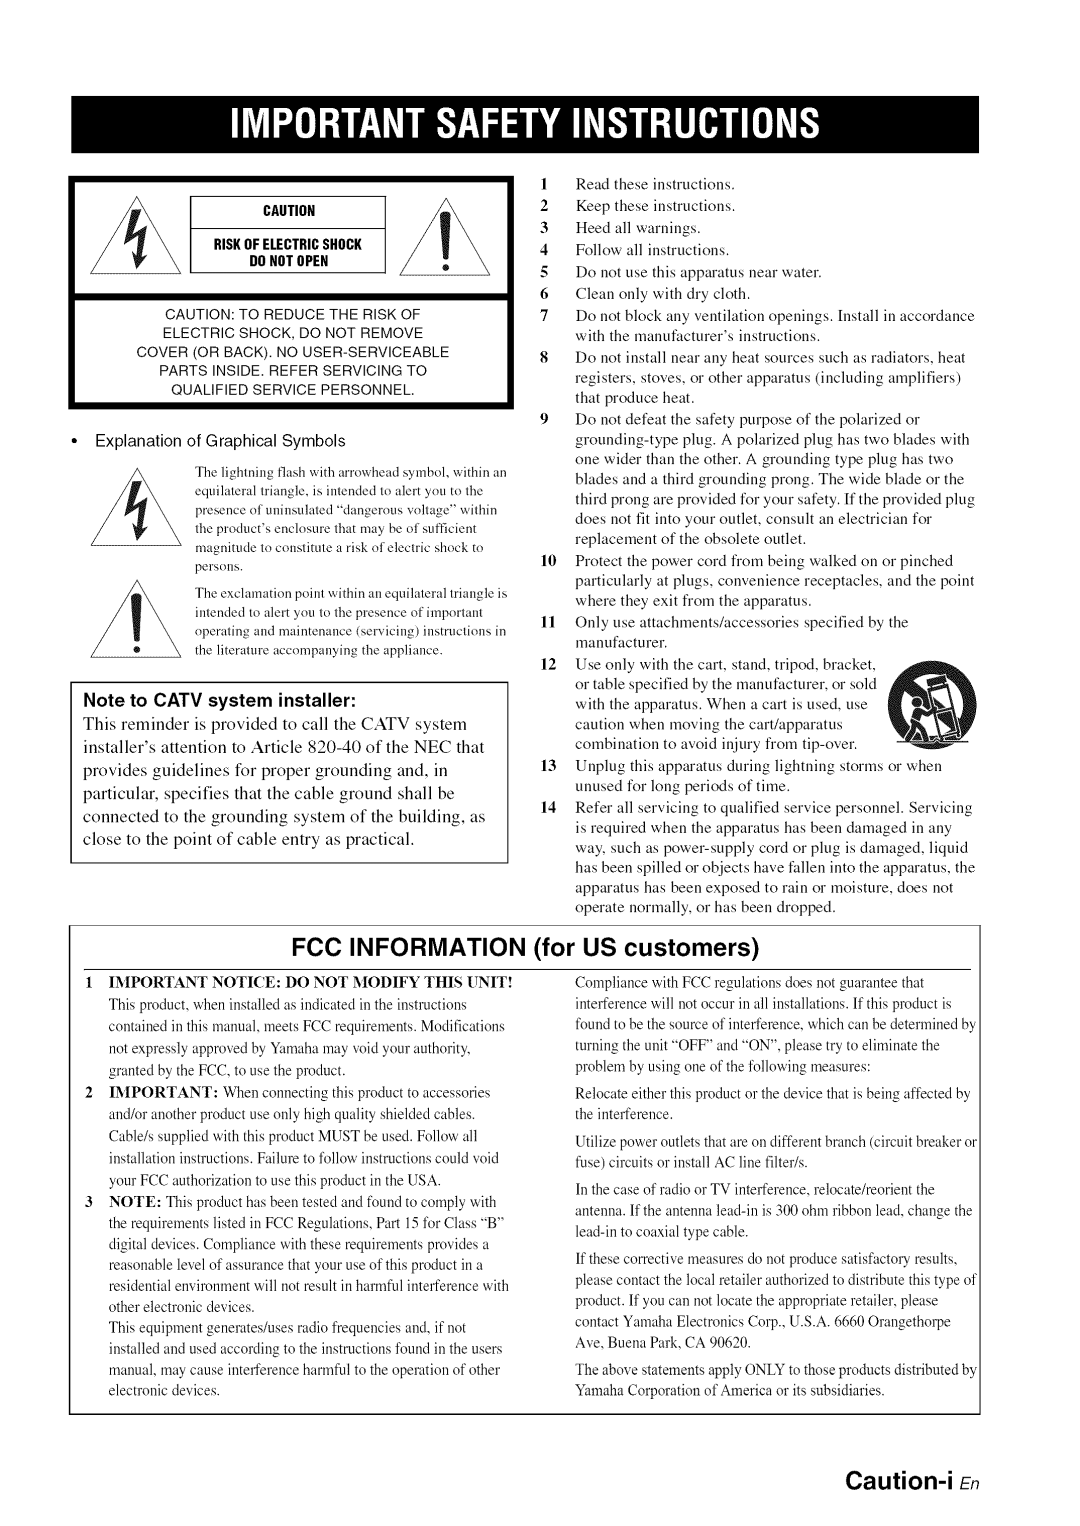 Yamaha RX-V1065 owner manual Caution-i En, Fcc Information, for US customers, Note to CATV system installer 